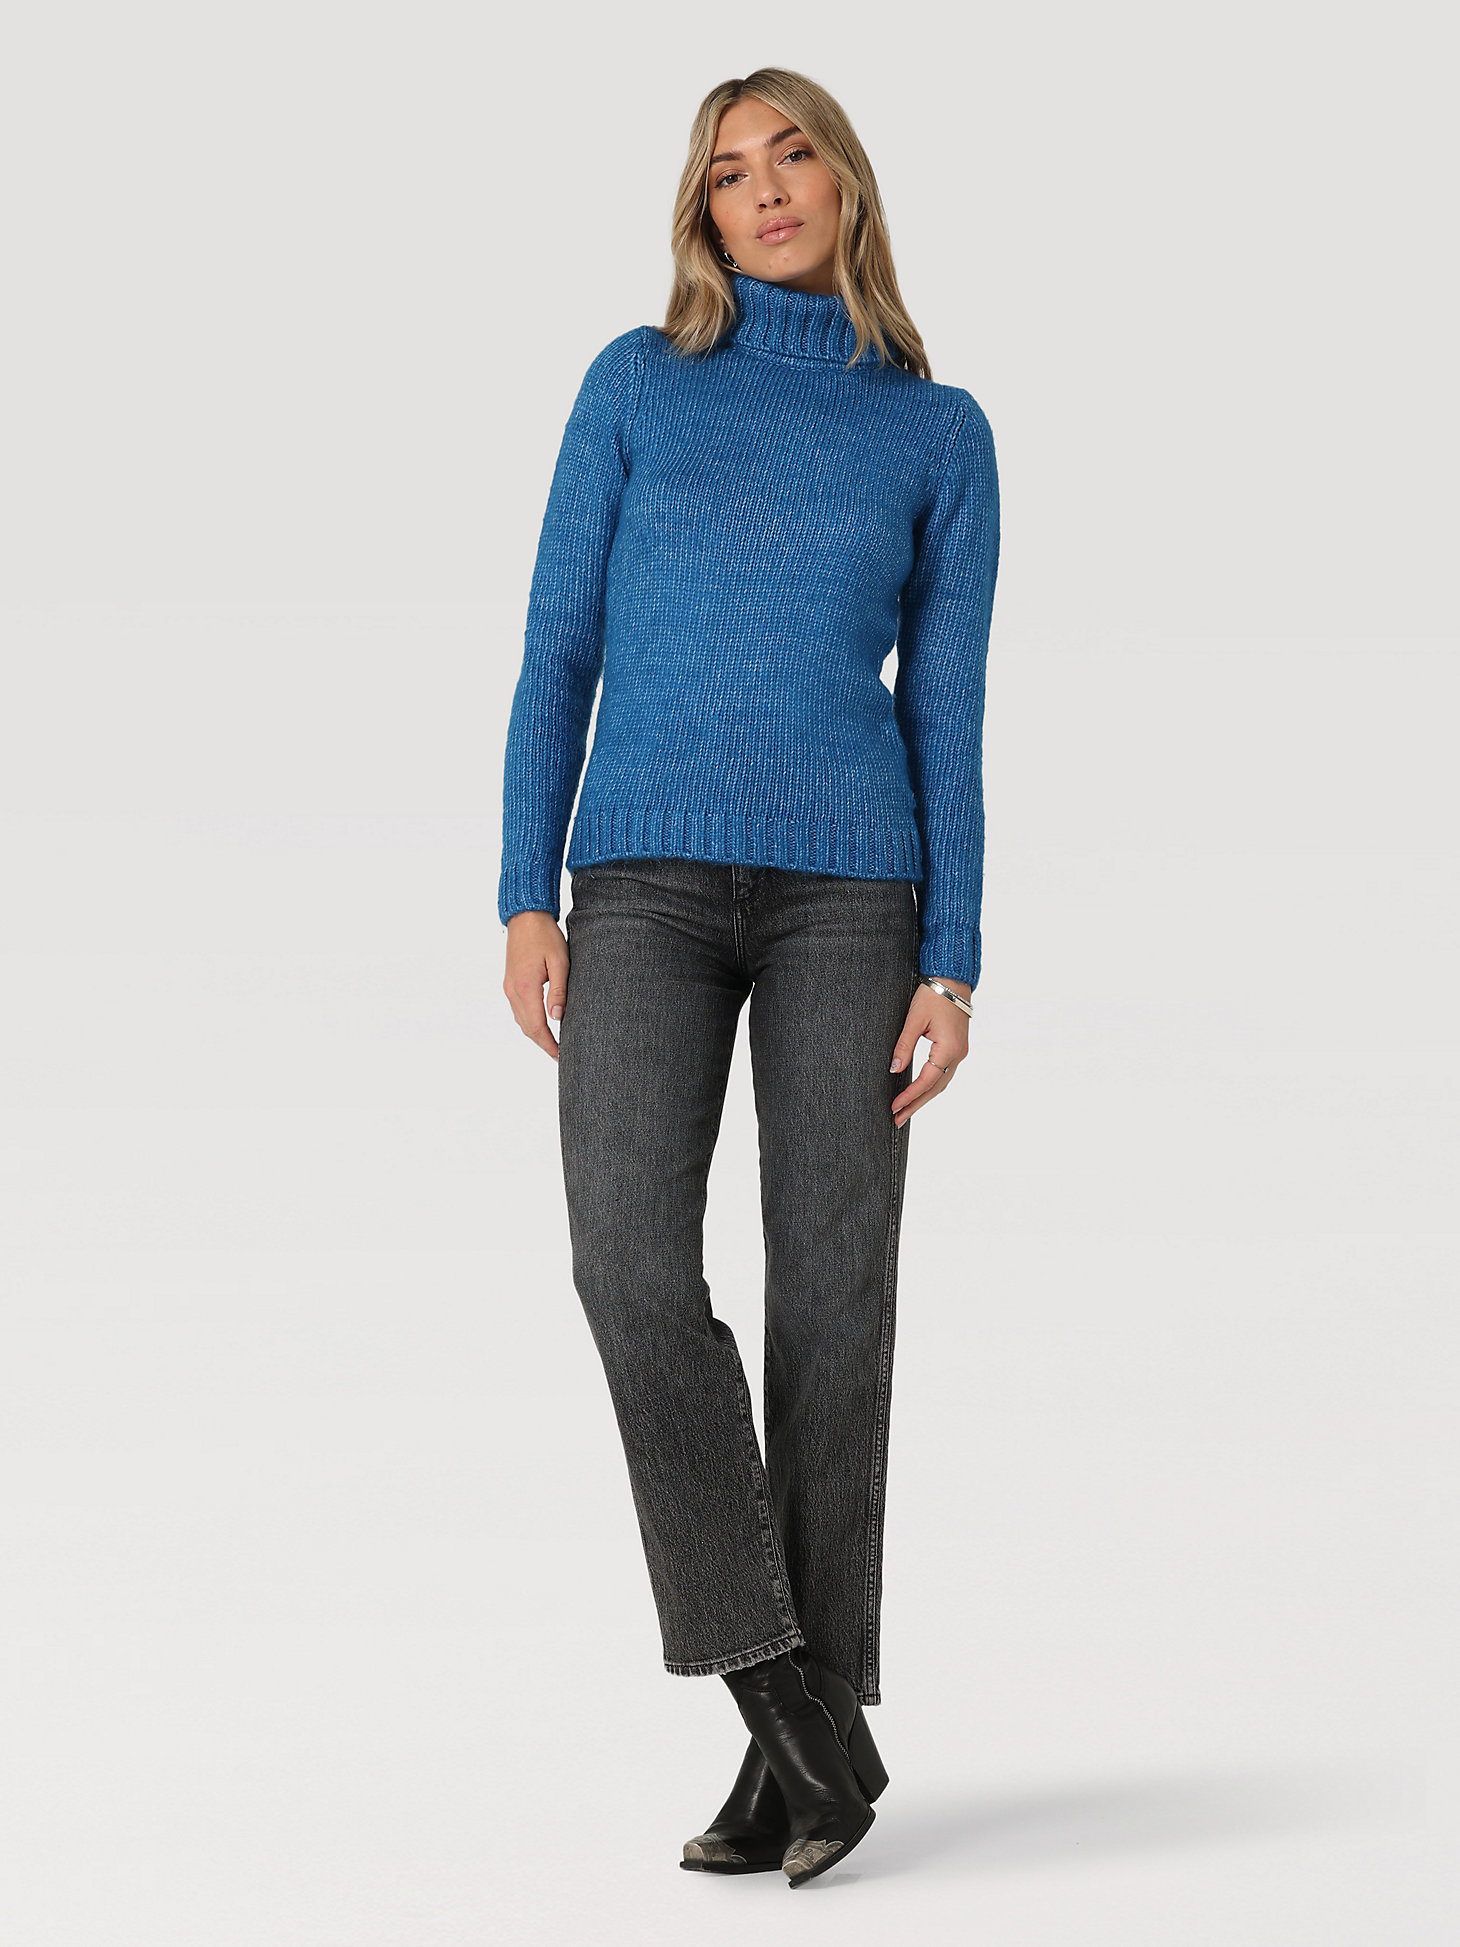 Women's Plush Sweater in Daphne Blue alternative view 4